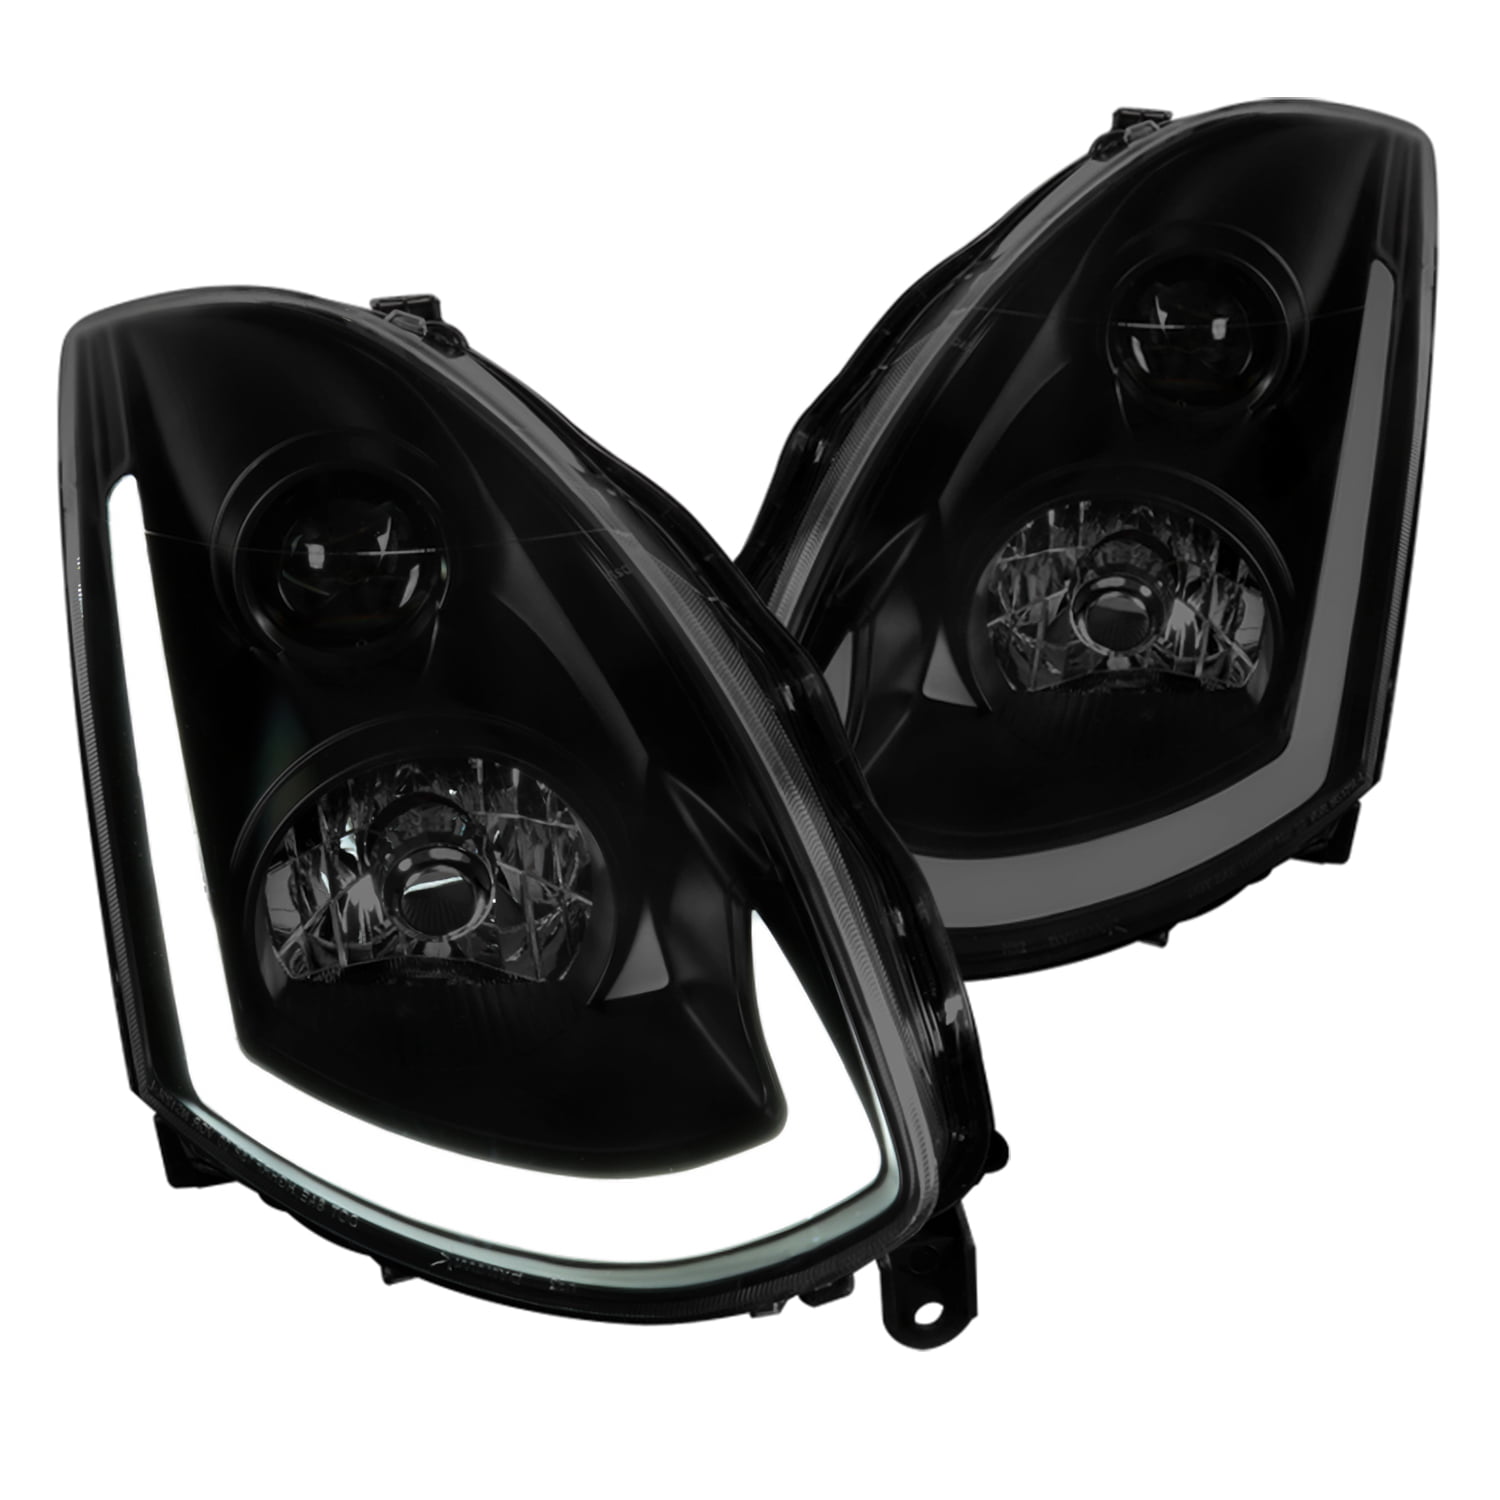 For 05-06 Infiniti G35 4Dr Sedan Dual Halo Projector Headlights w/ LED Strip L+R